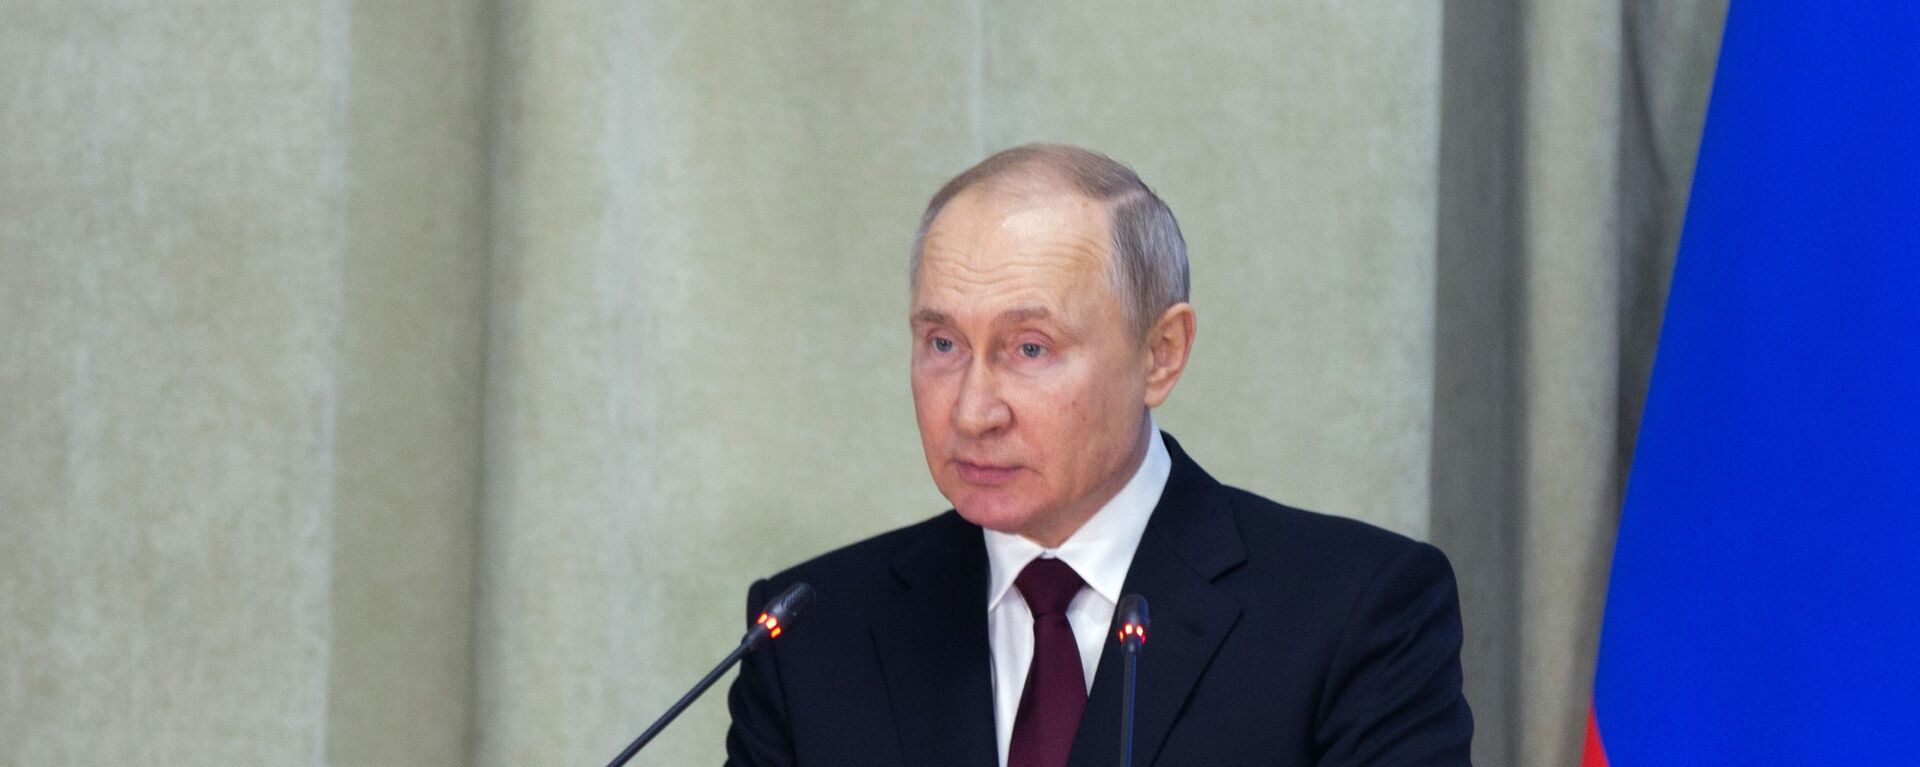 Ruski predsednik Vladimir Putin - Sputnik Srbija, 1920, 21.04.2021